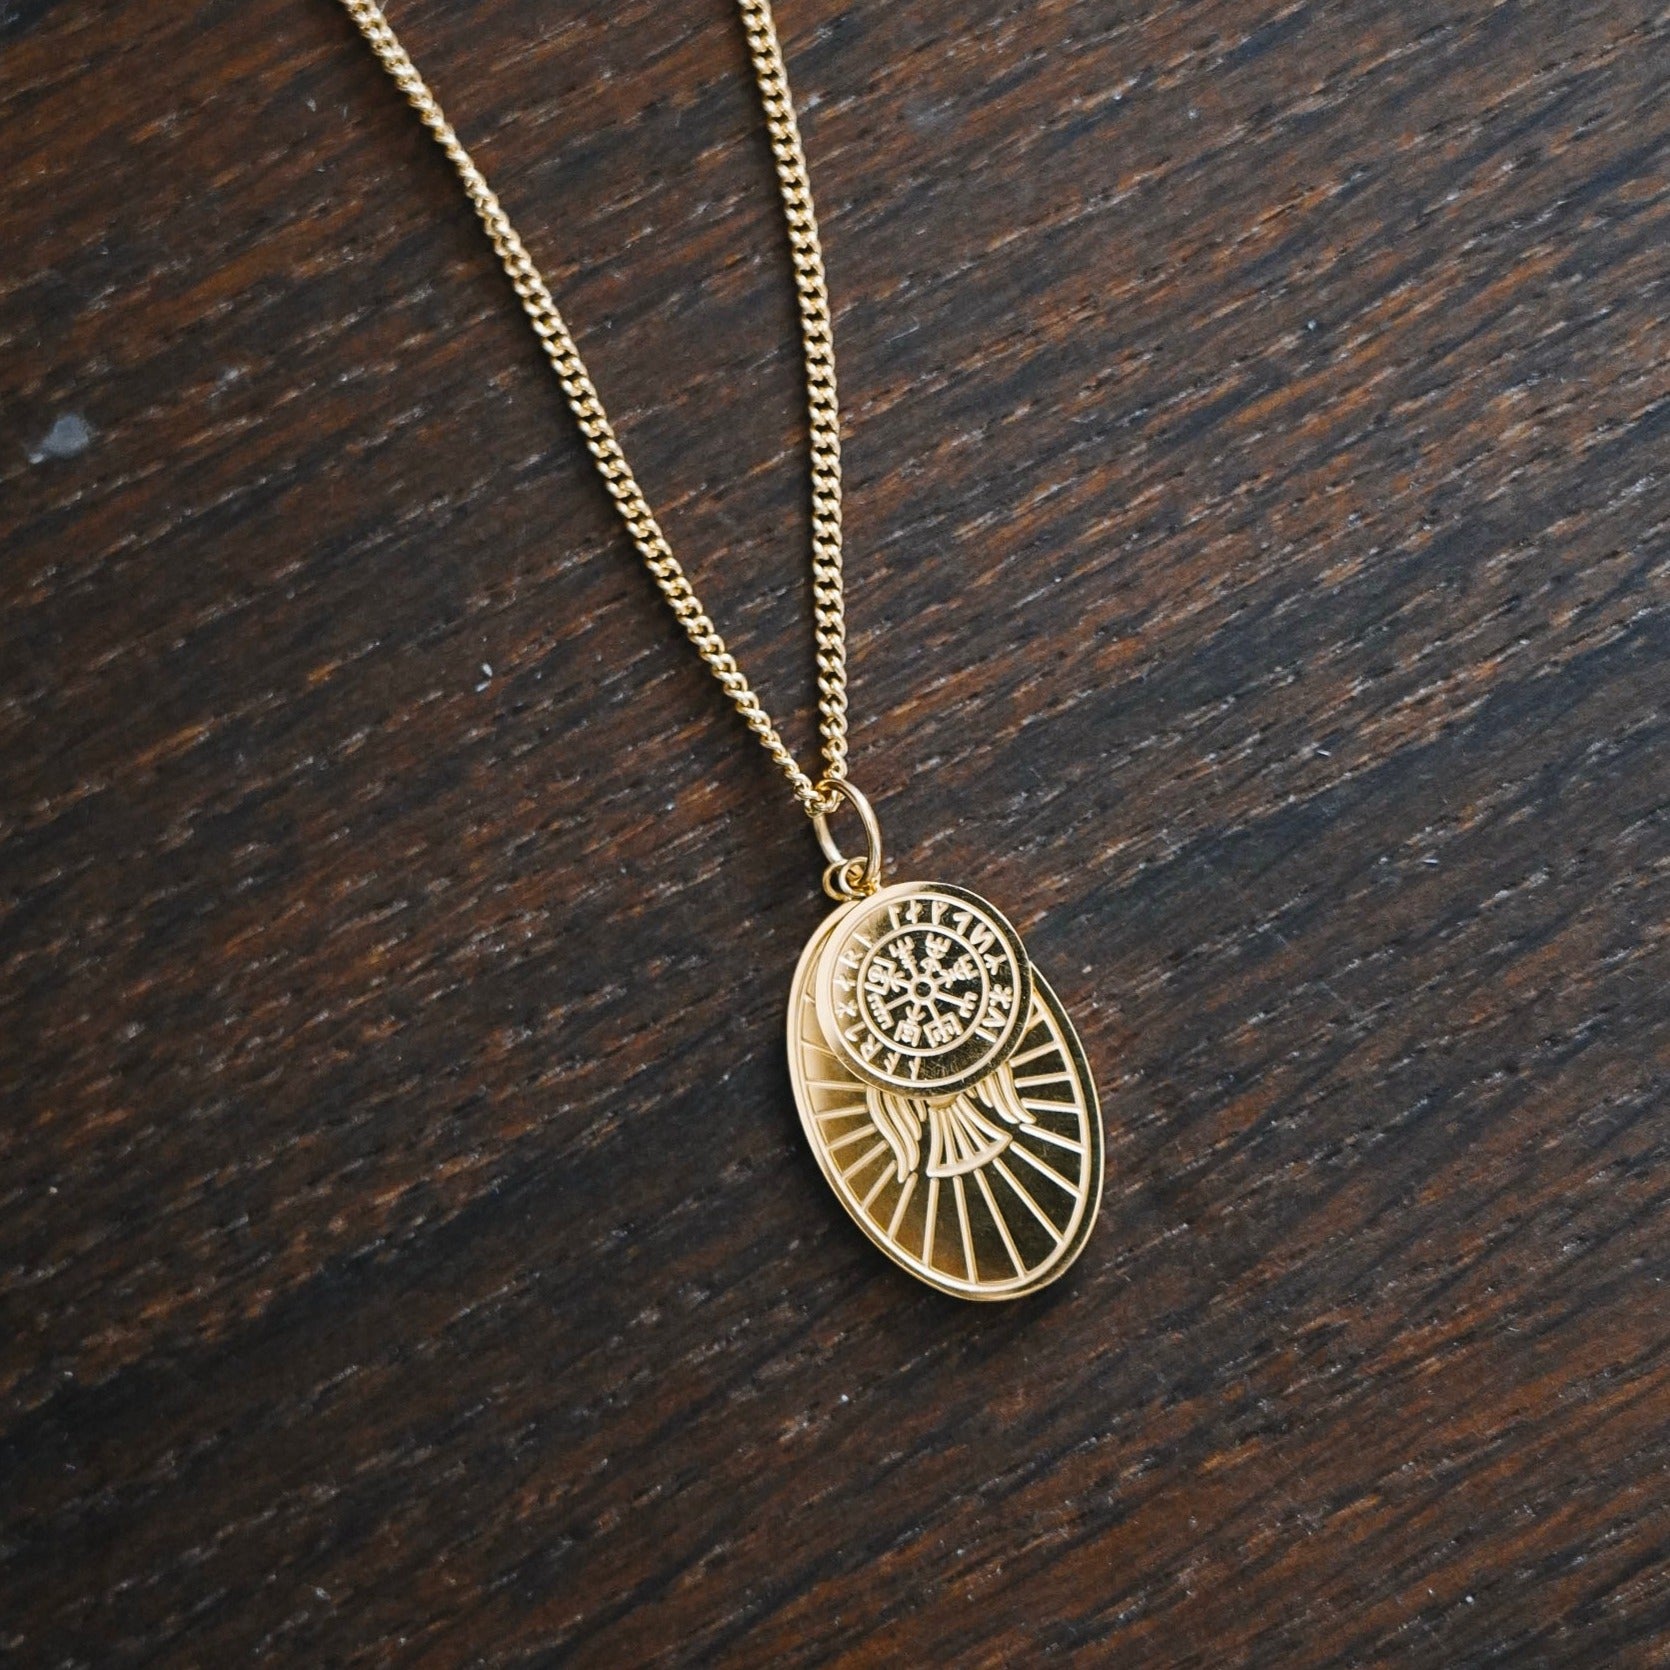 NL Muninn necklace - Gold-toned